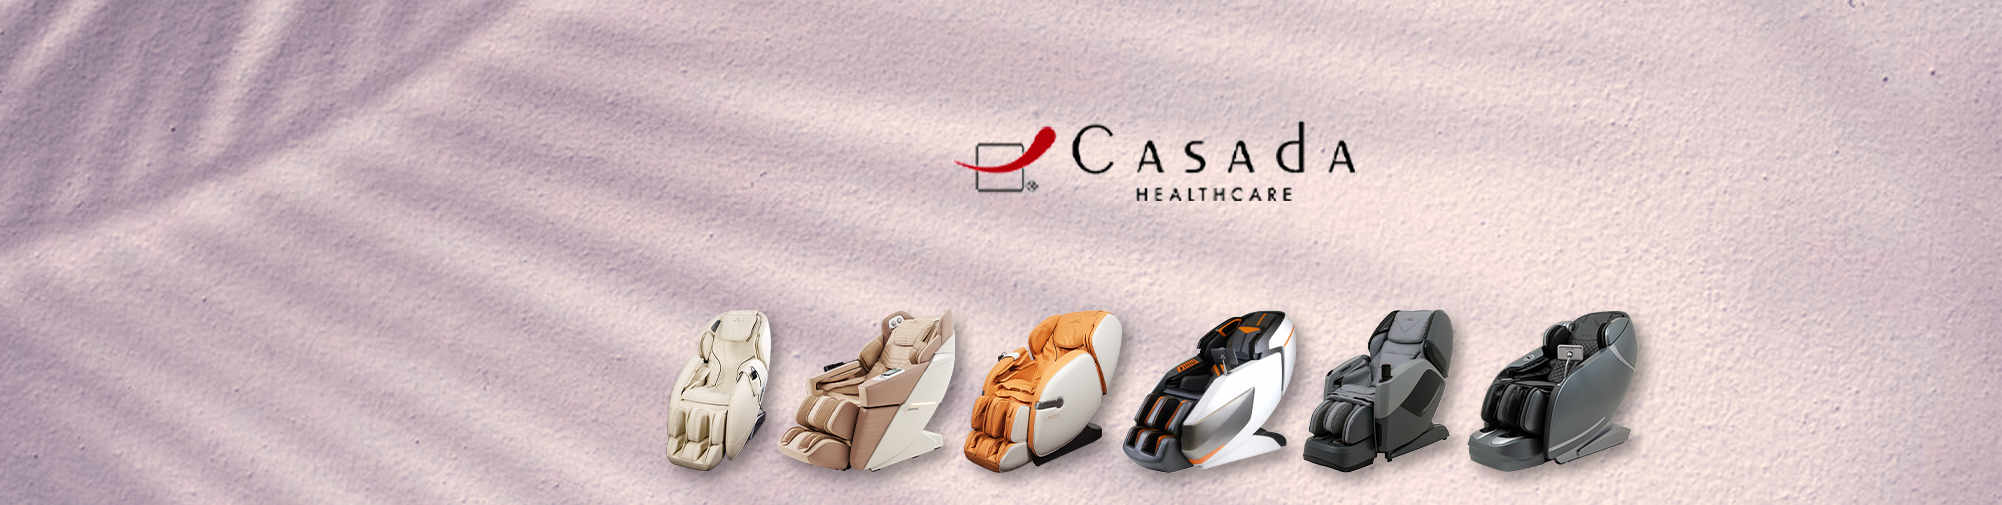 Casada - verlässlicher Partner | Massagesessel Welt